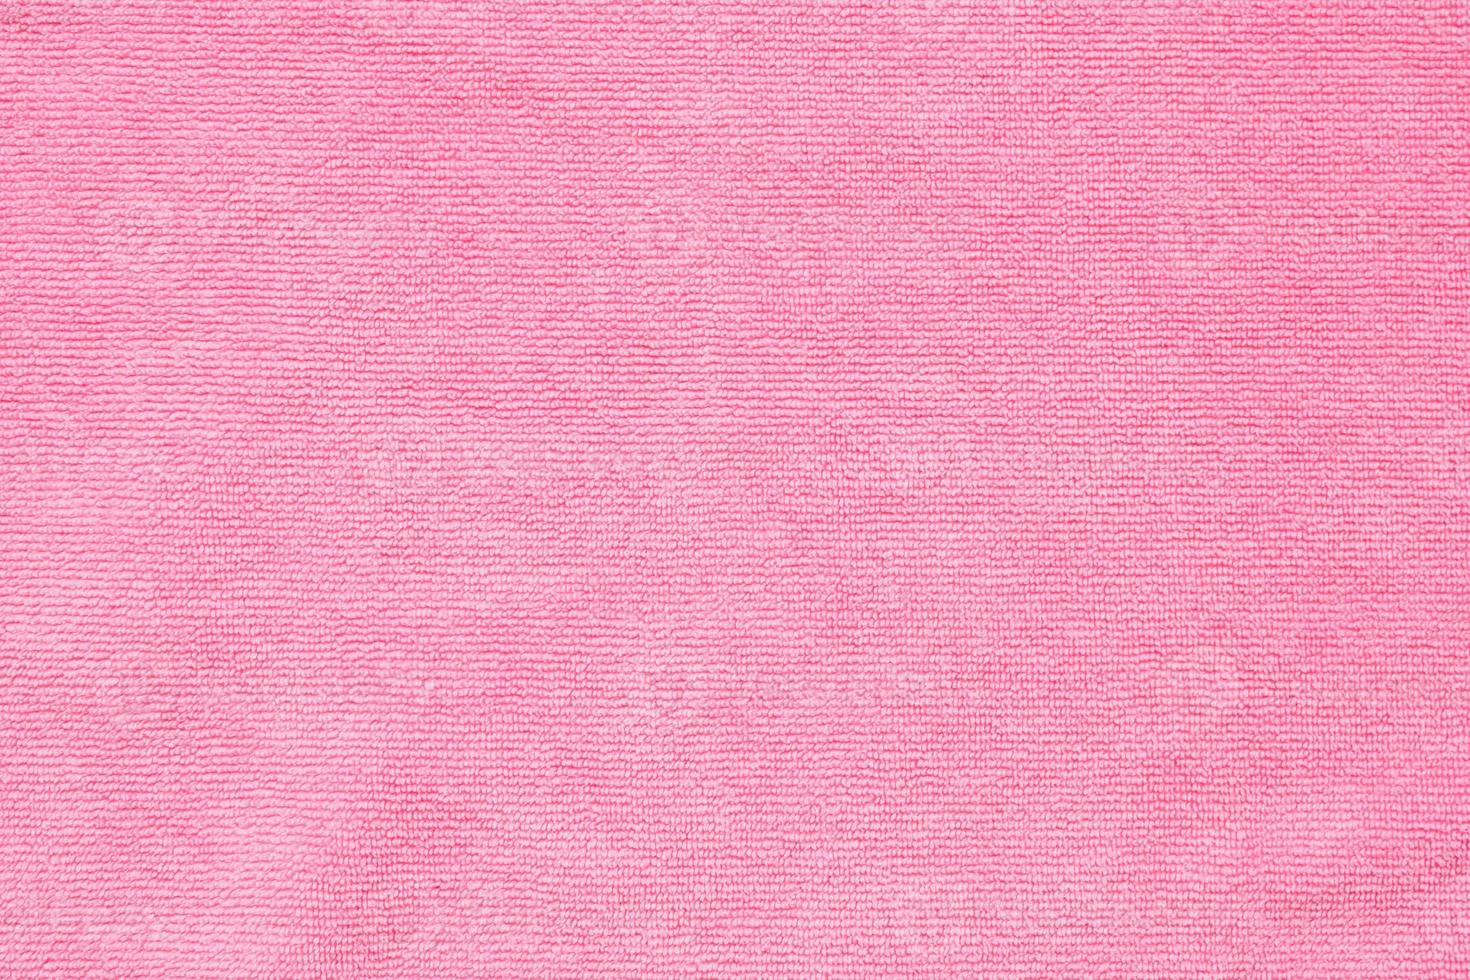 superficie de textura de tela de toalla rosa fondo de primer plano foto